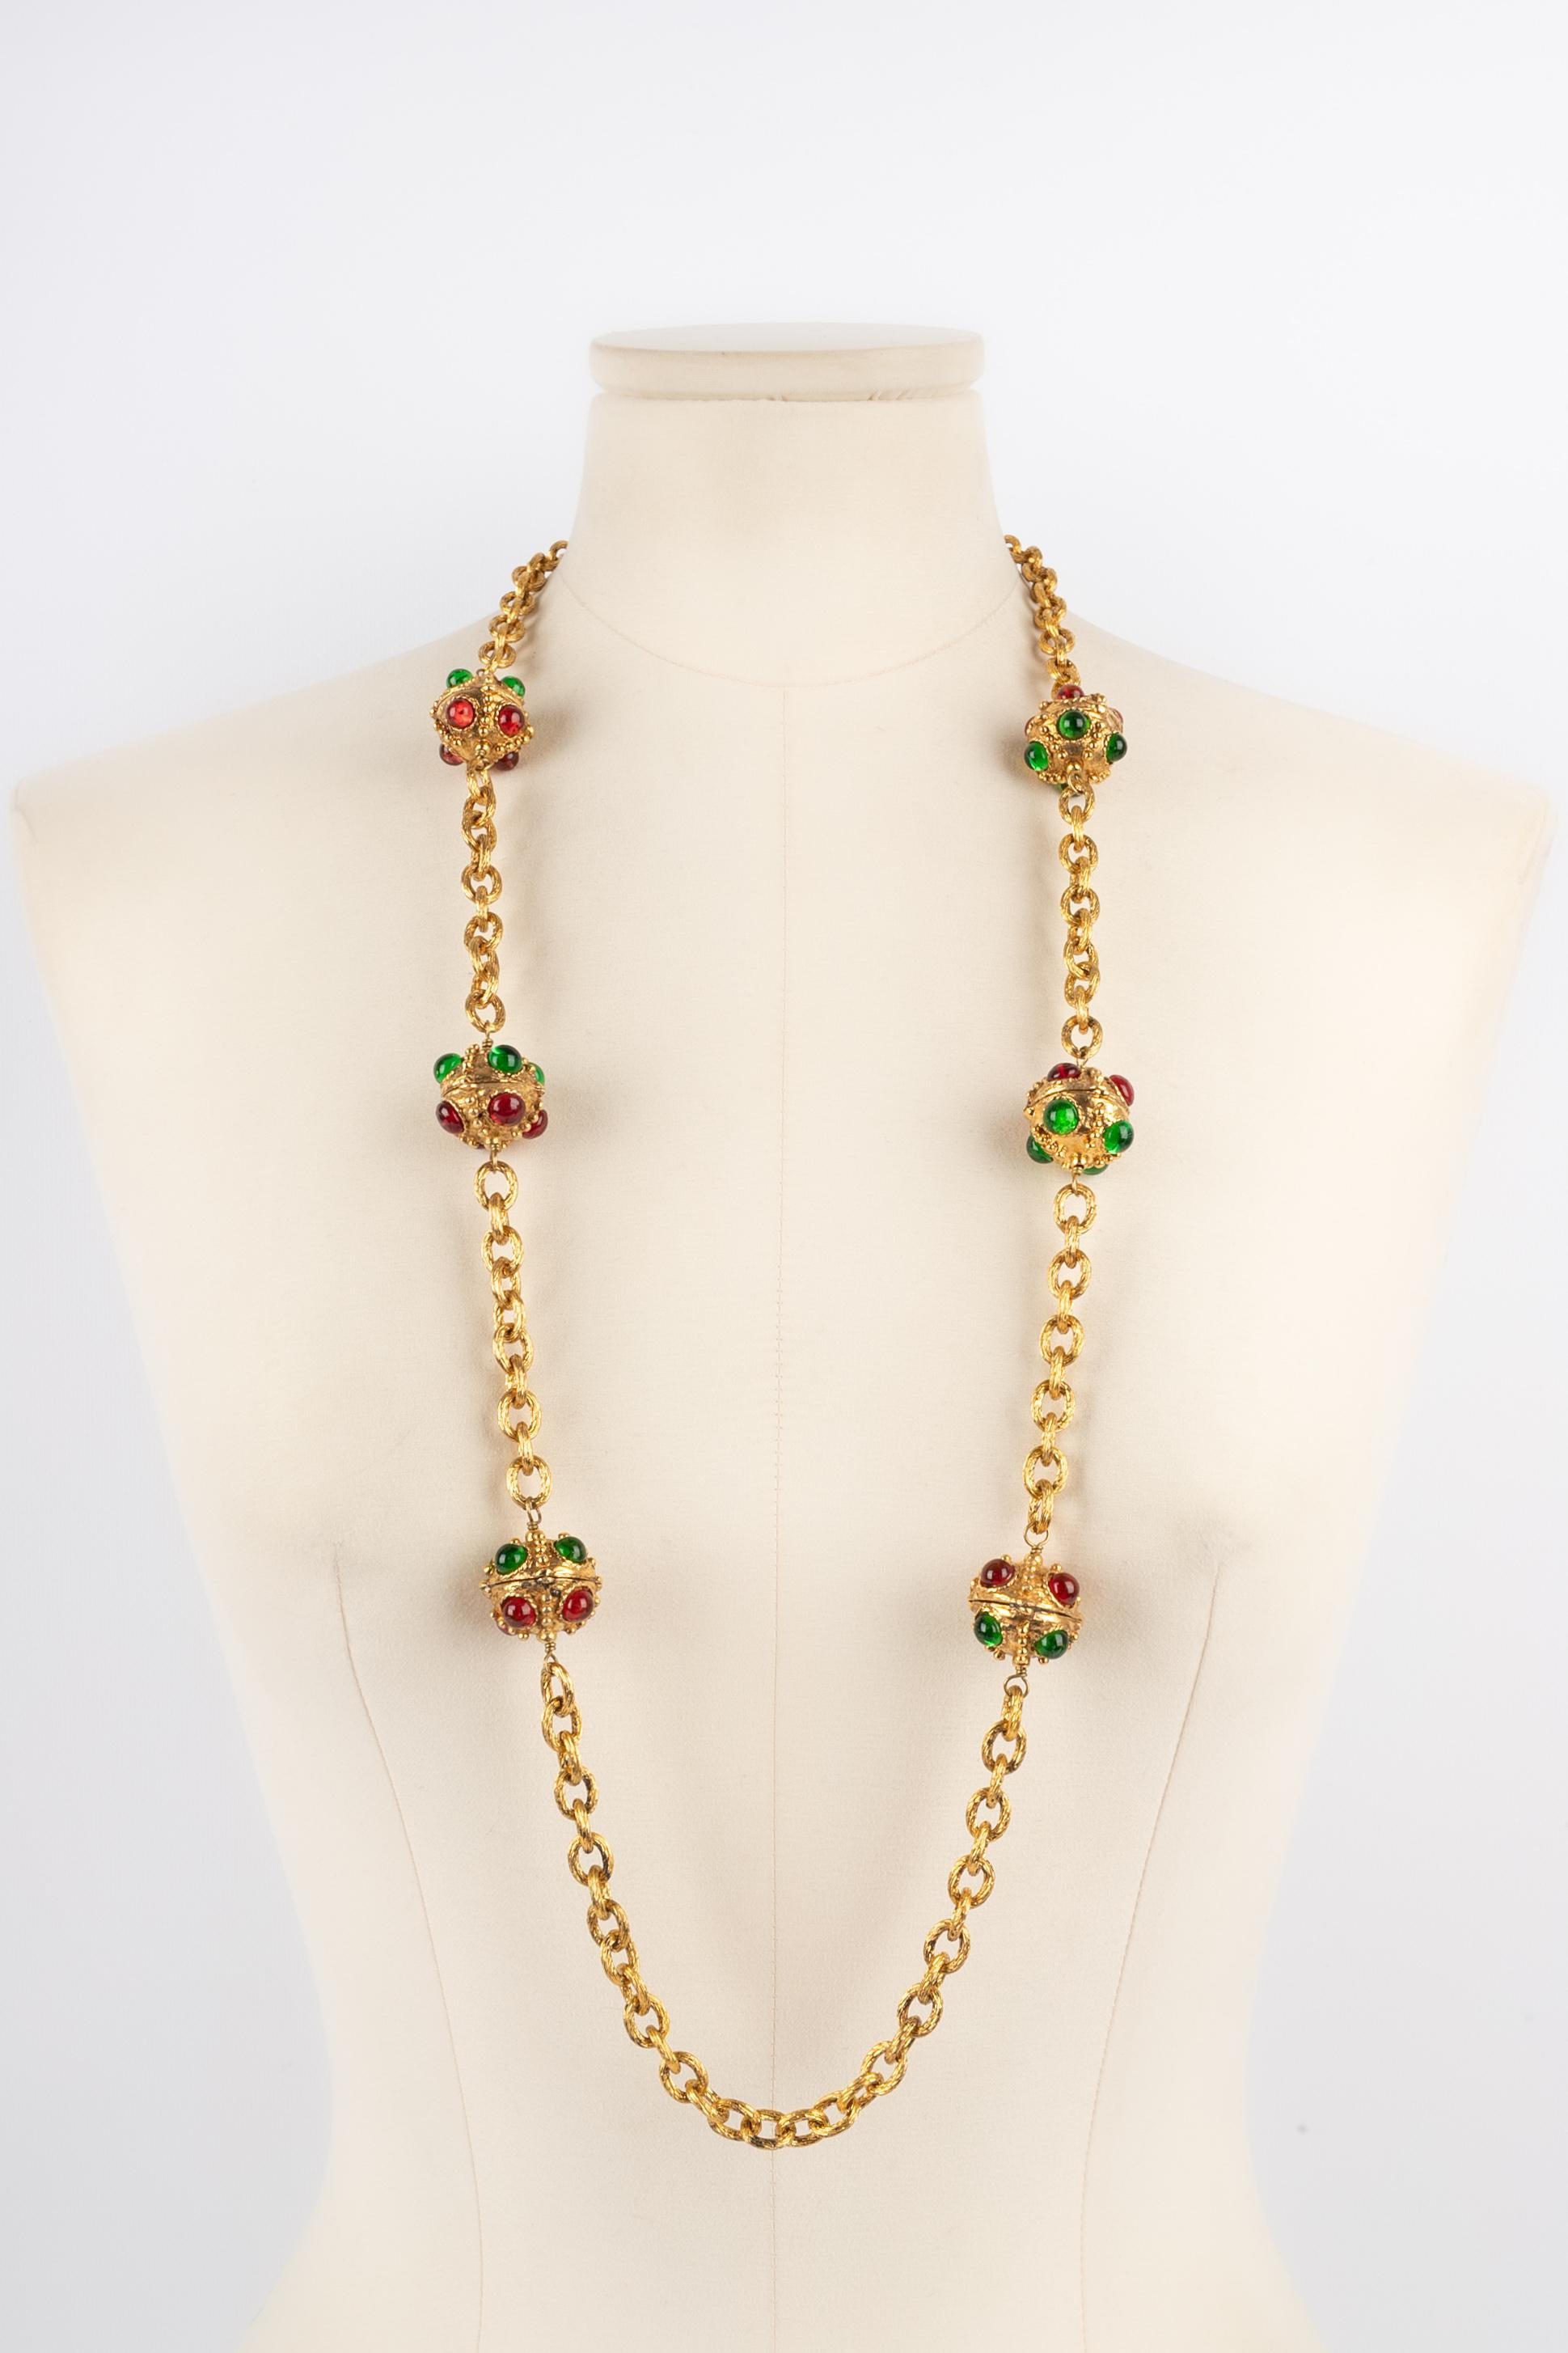 Chanel Byzantine necklace 7